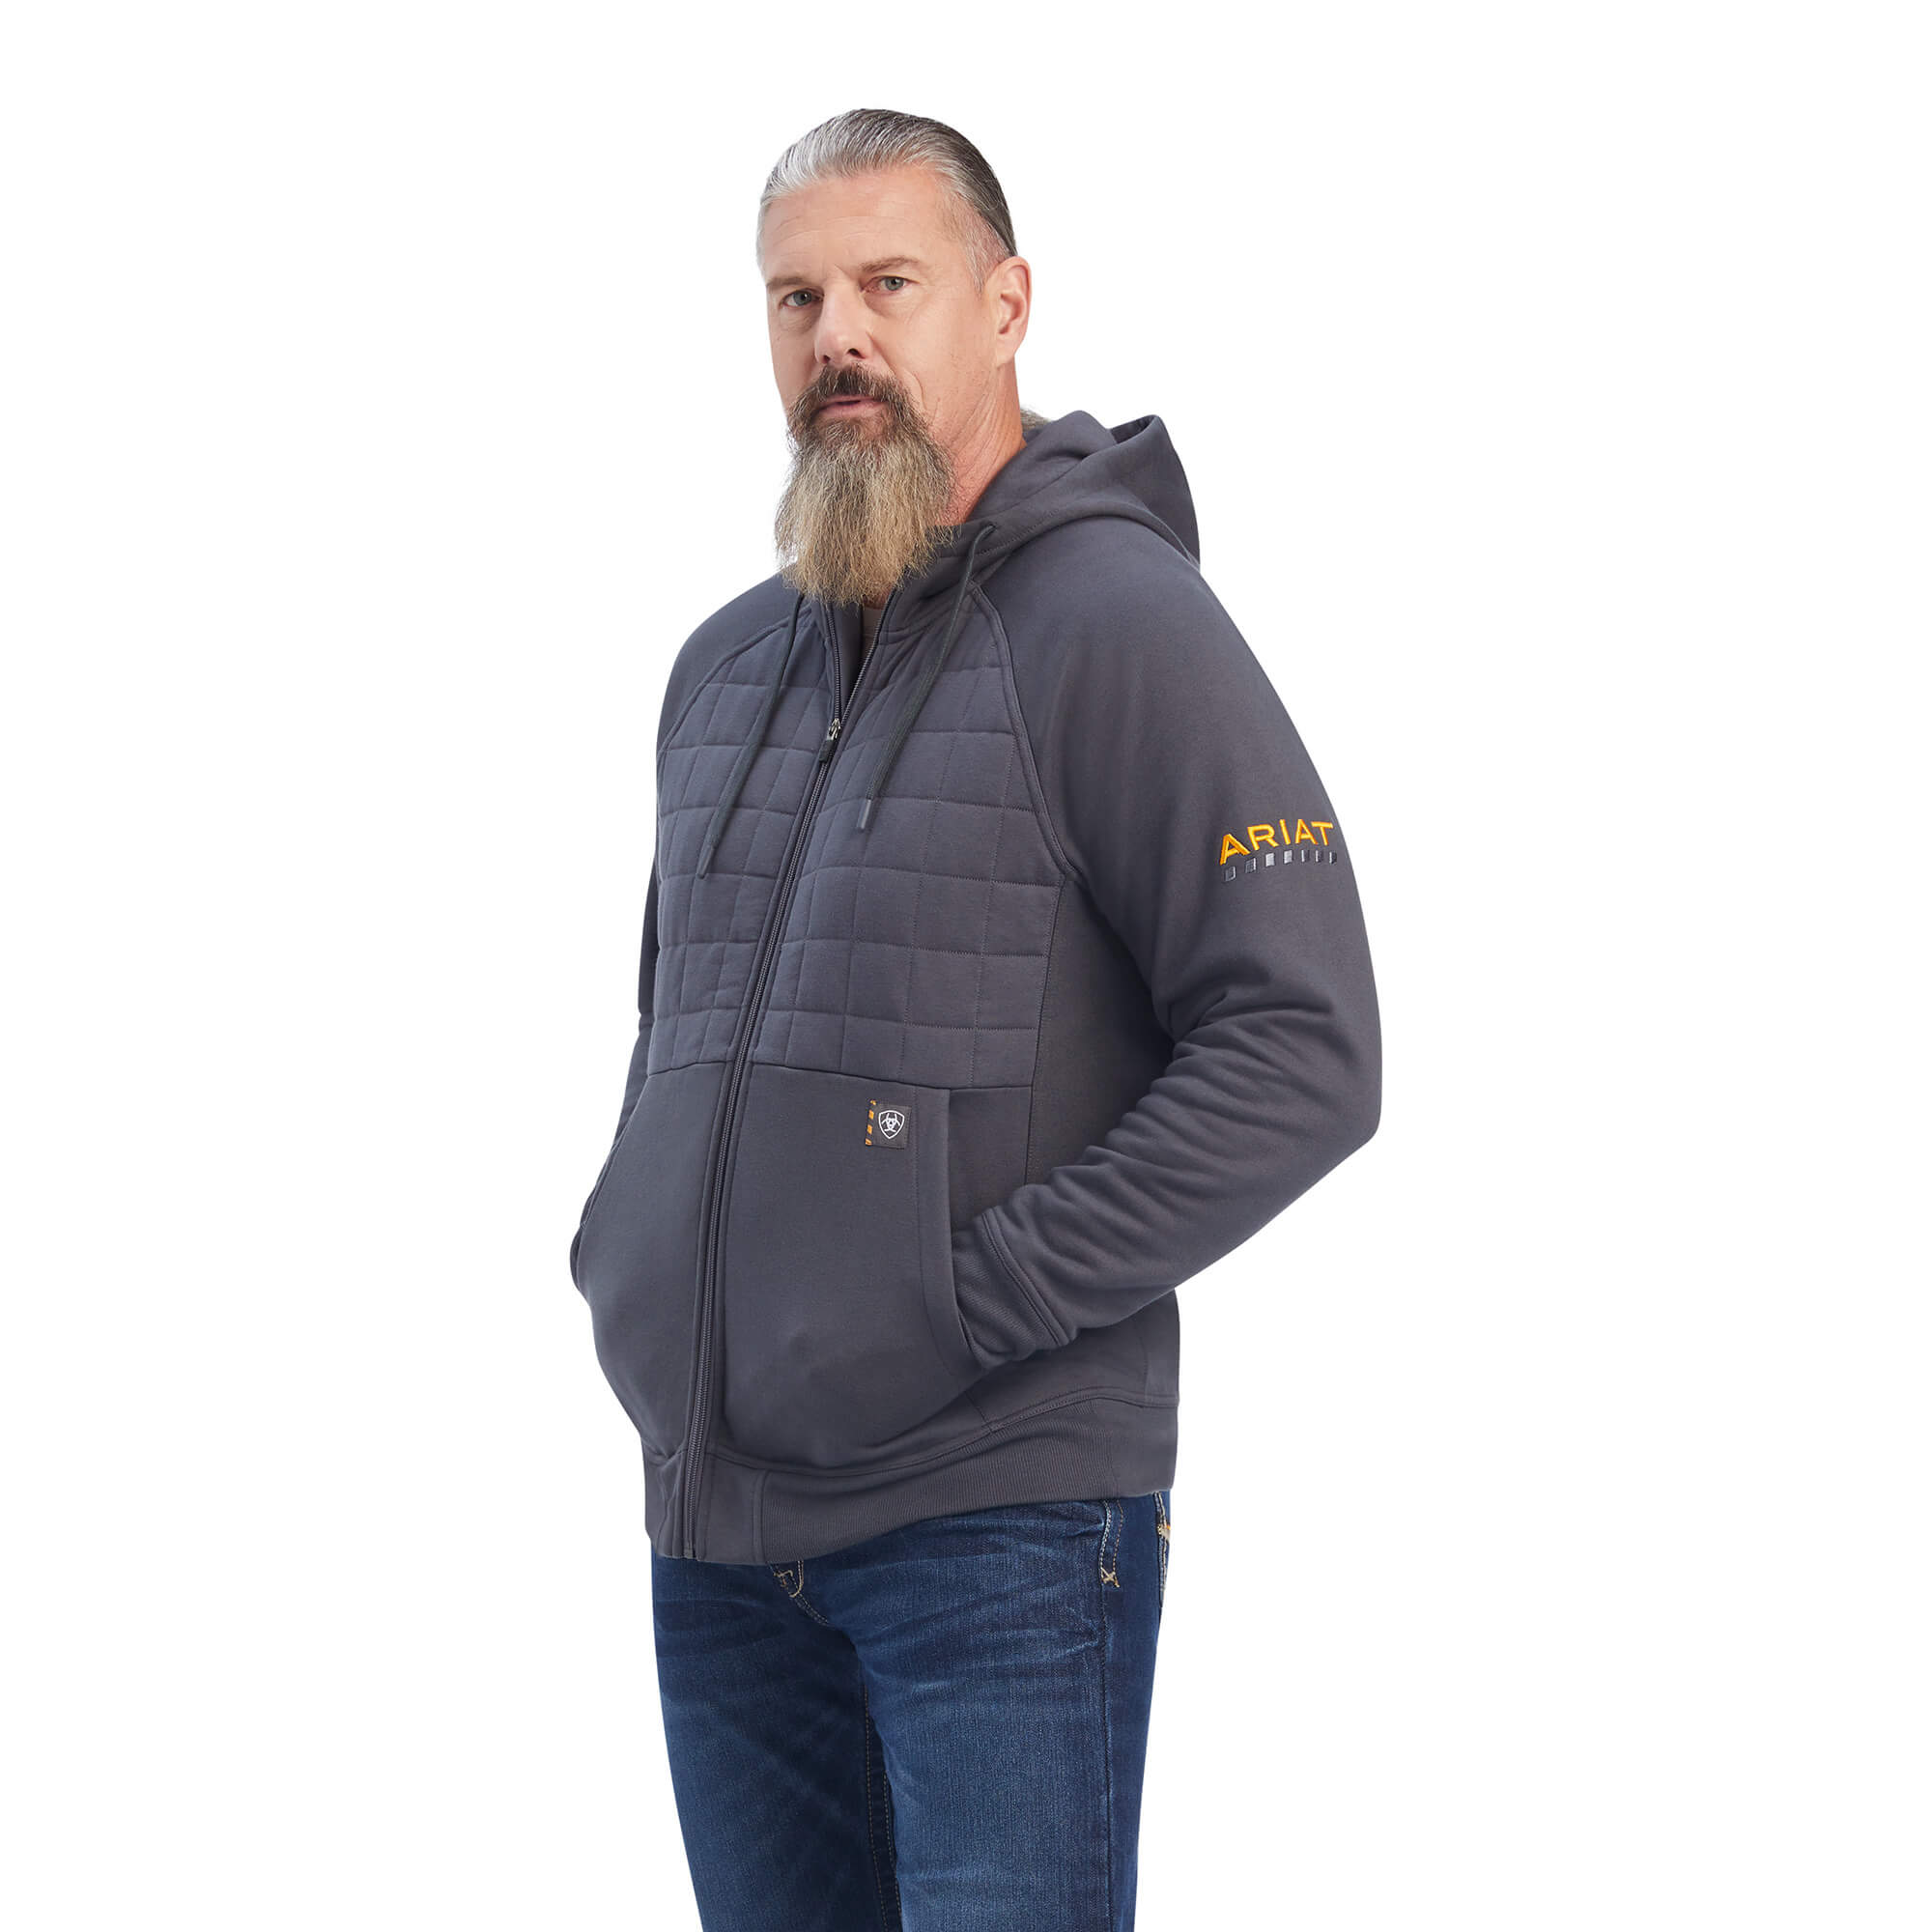 Ariat Rebar Regulator Full Zip Hooded Jacket